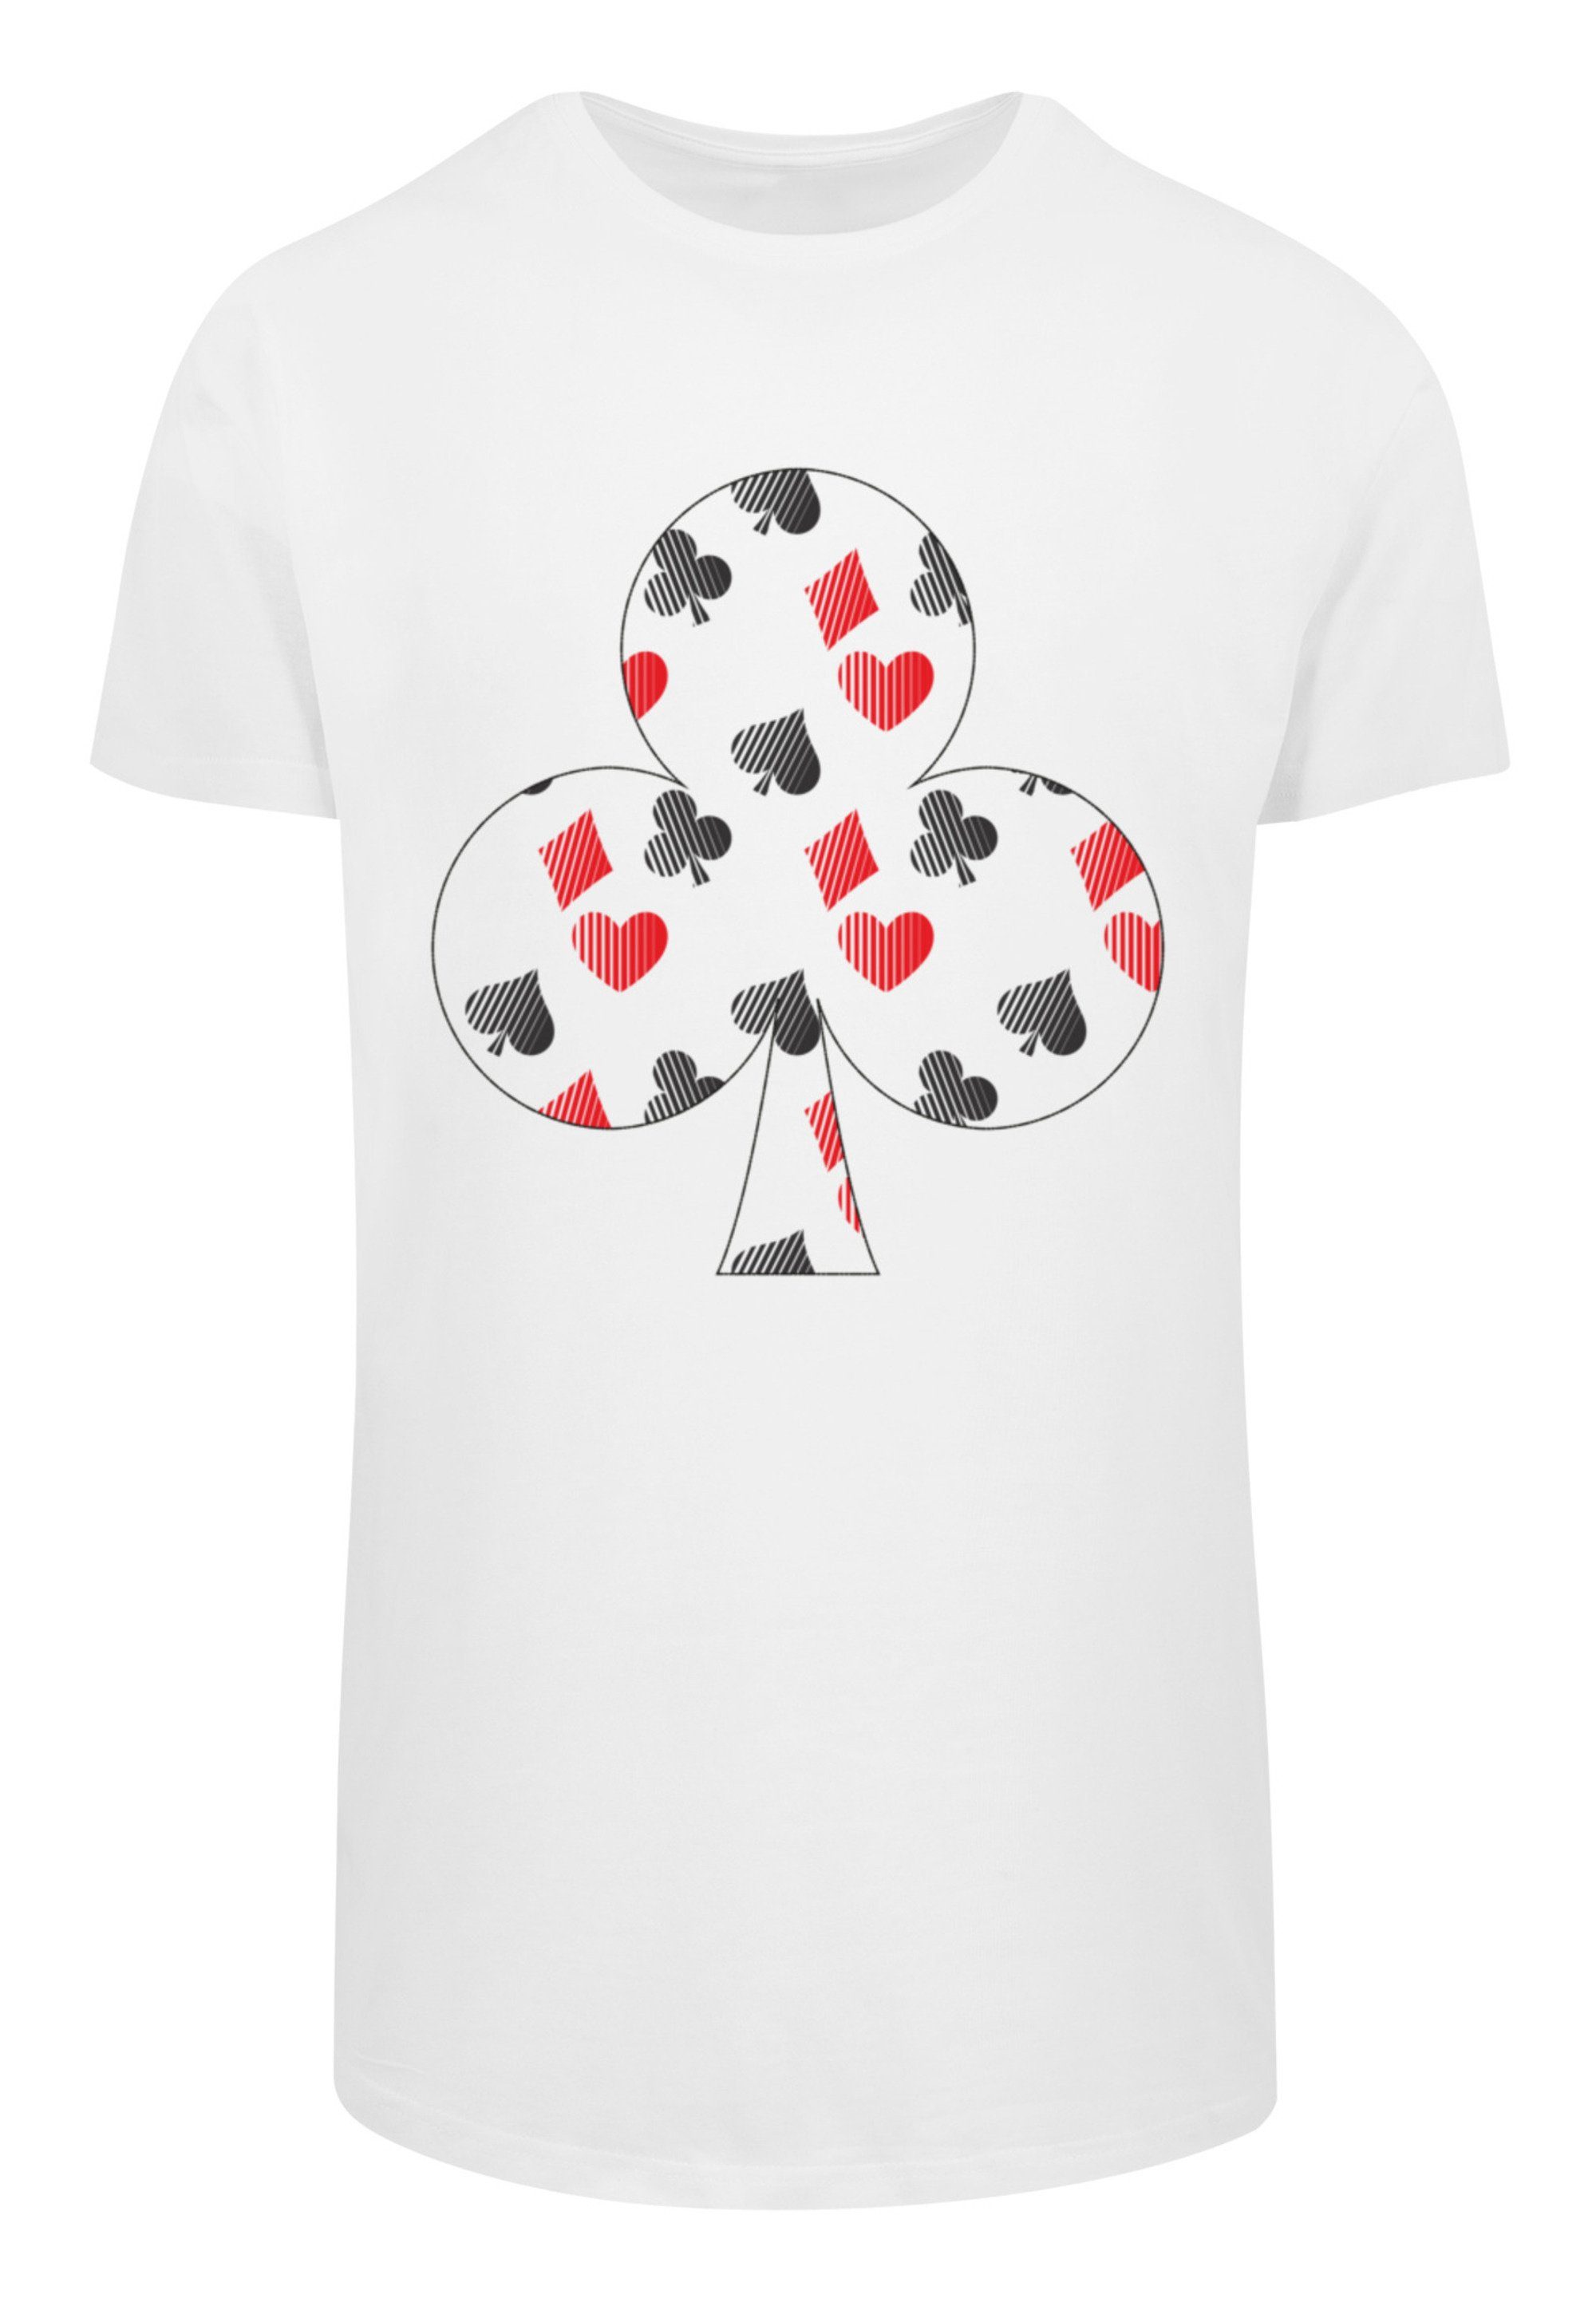 F4NT4STIC T-Shirt Kartenspiel Kreuz Herz Karo Pik Poker Print